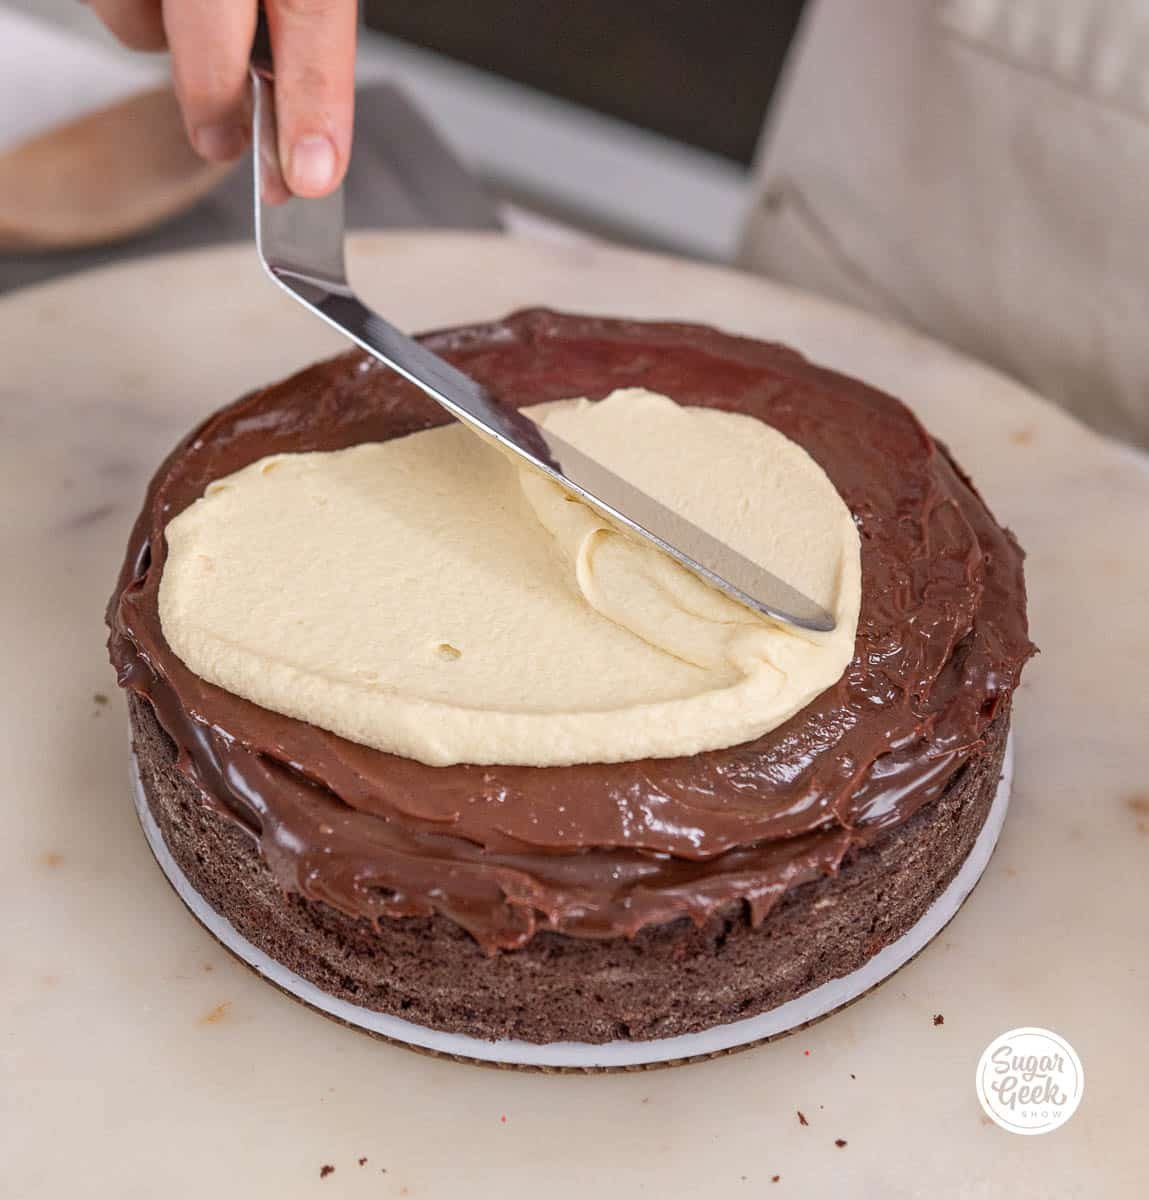 hand smoothing white chocolate ganache with a spatula onto a chocolate cake